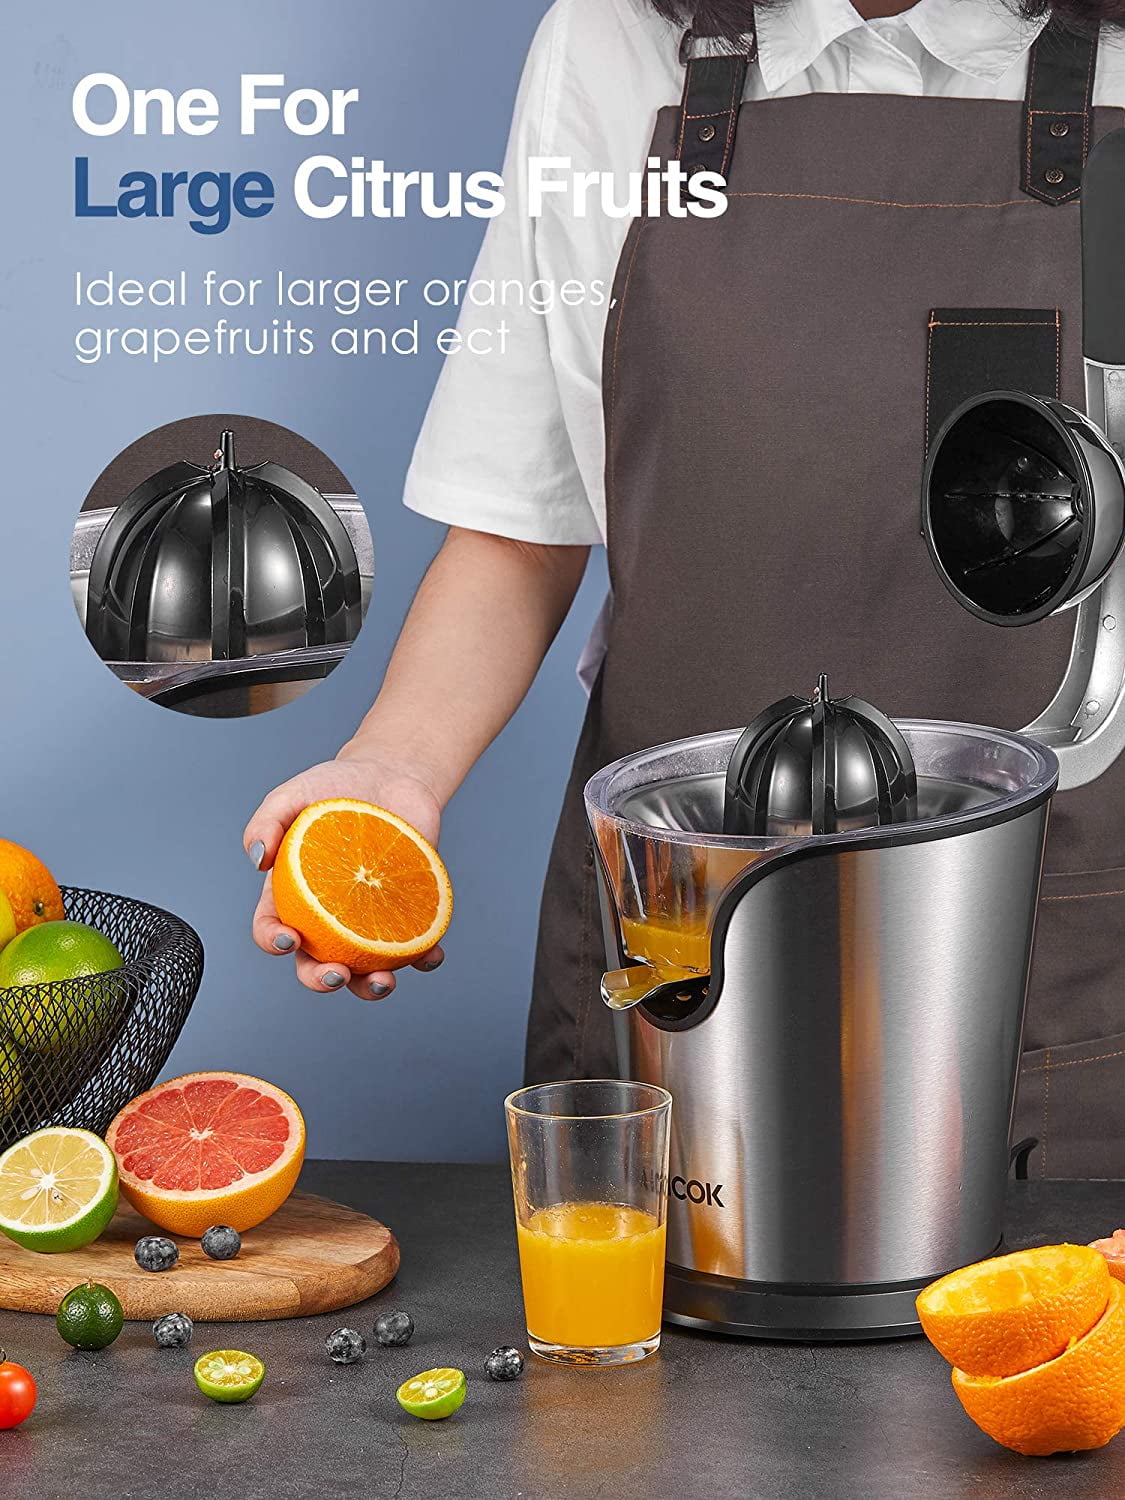 160W Citrus JUICER Machine Orange Lemon Press Extractor Juice Electric JUG Steel